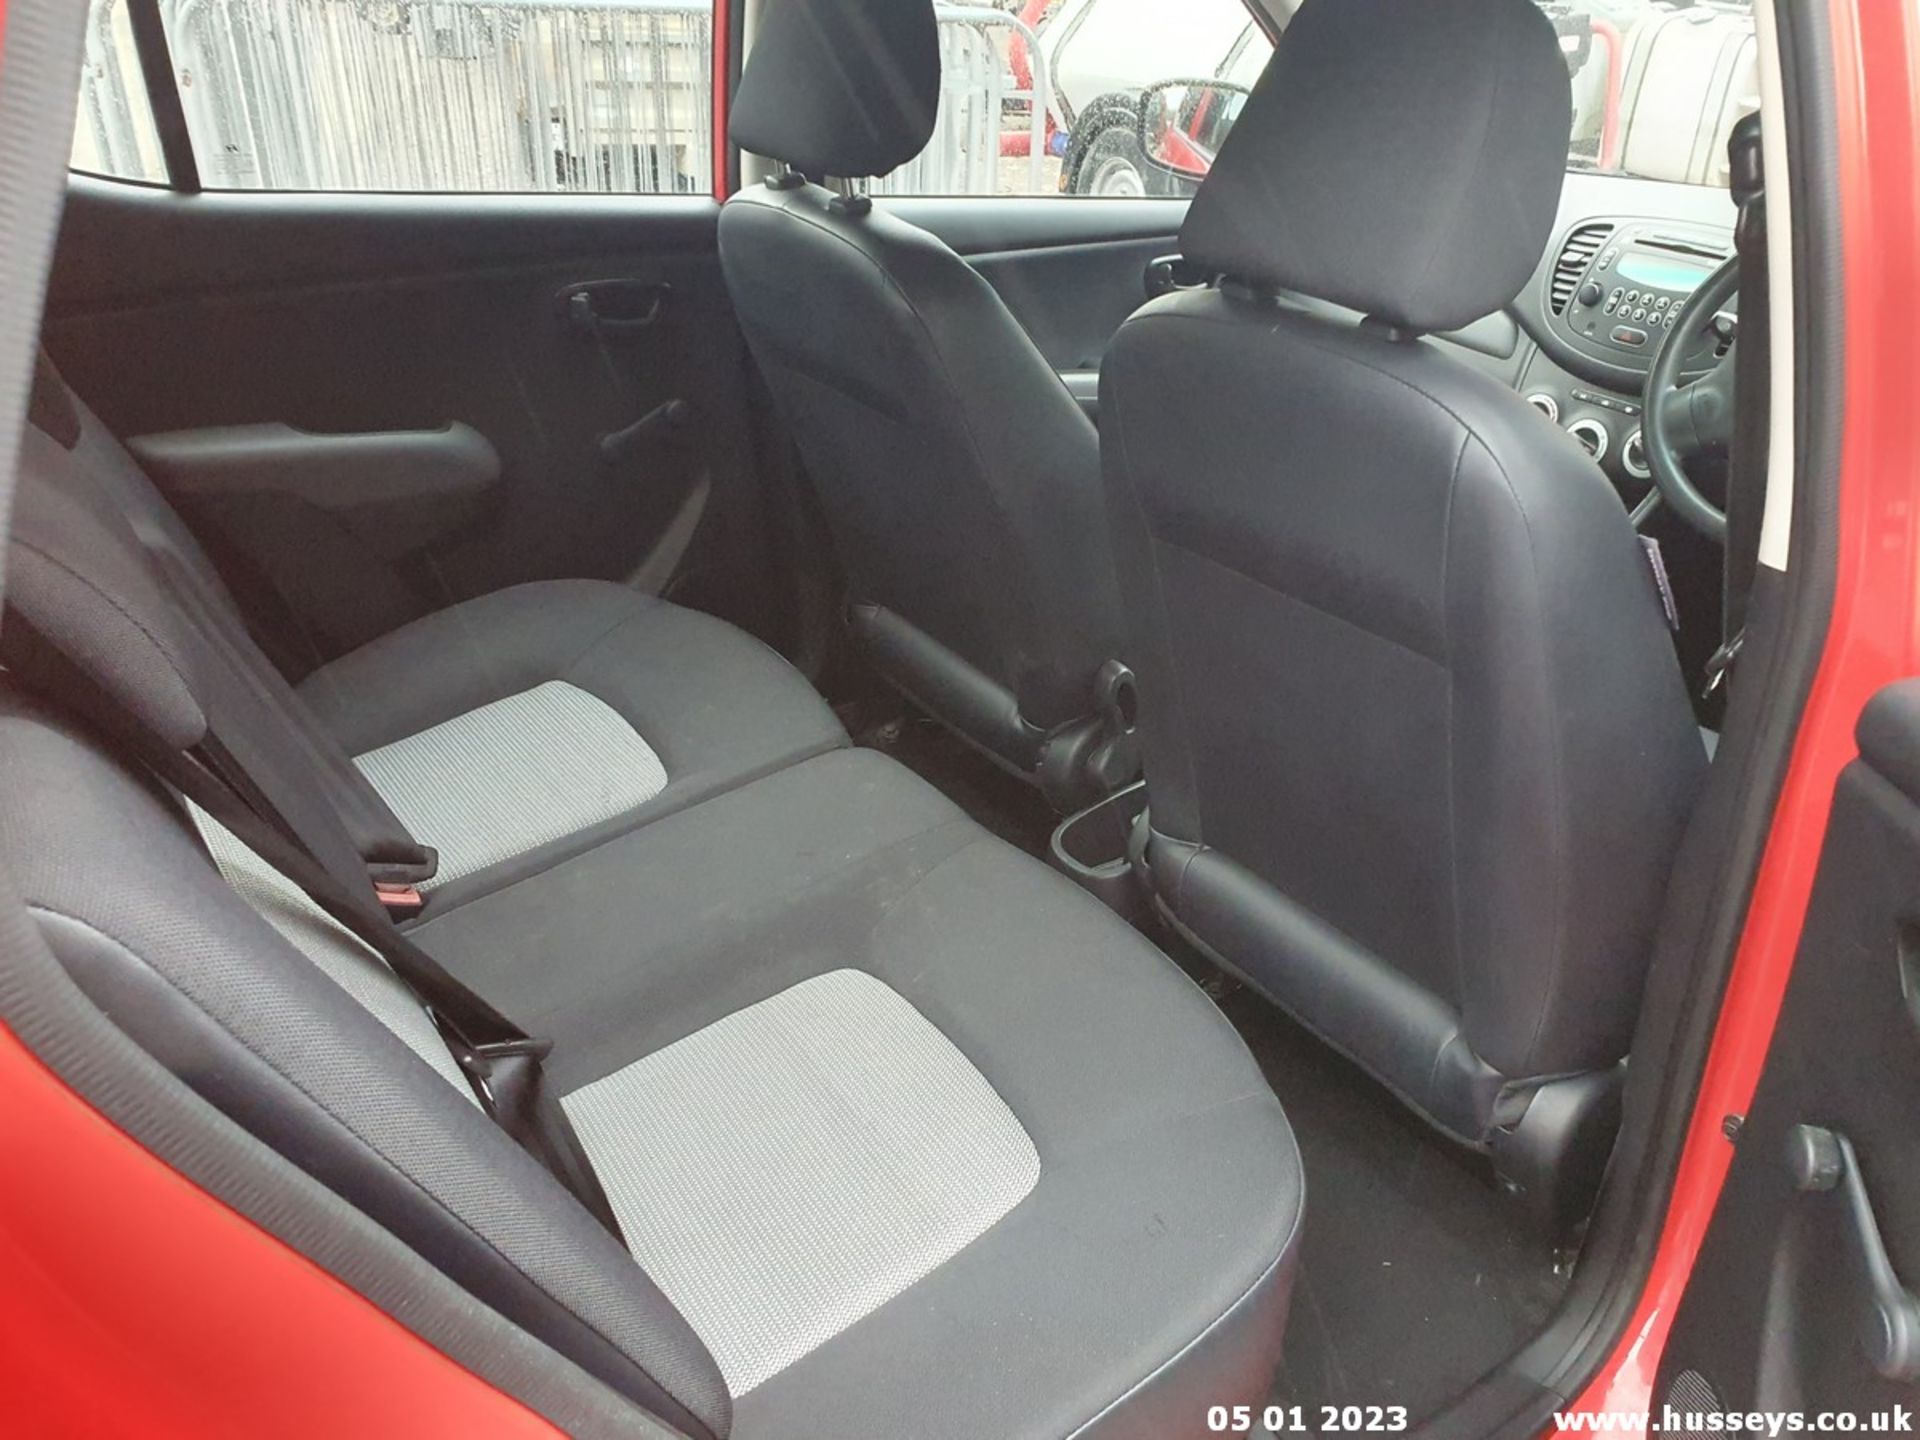 10/59 HYUNDAI I10 CLASSIC - 1248cc 5dr Hatchback (Red, 73k) - Image 17 of 32